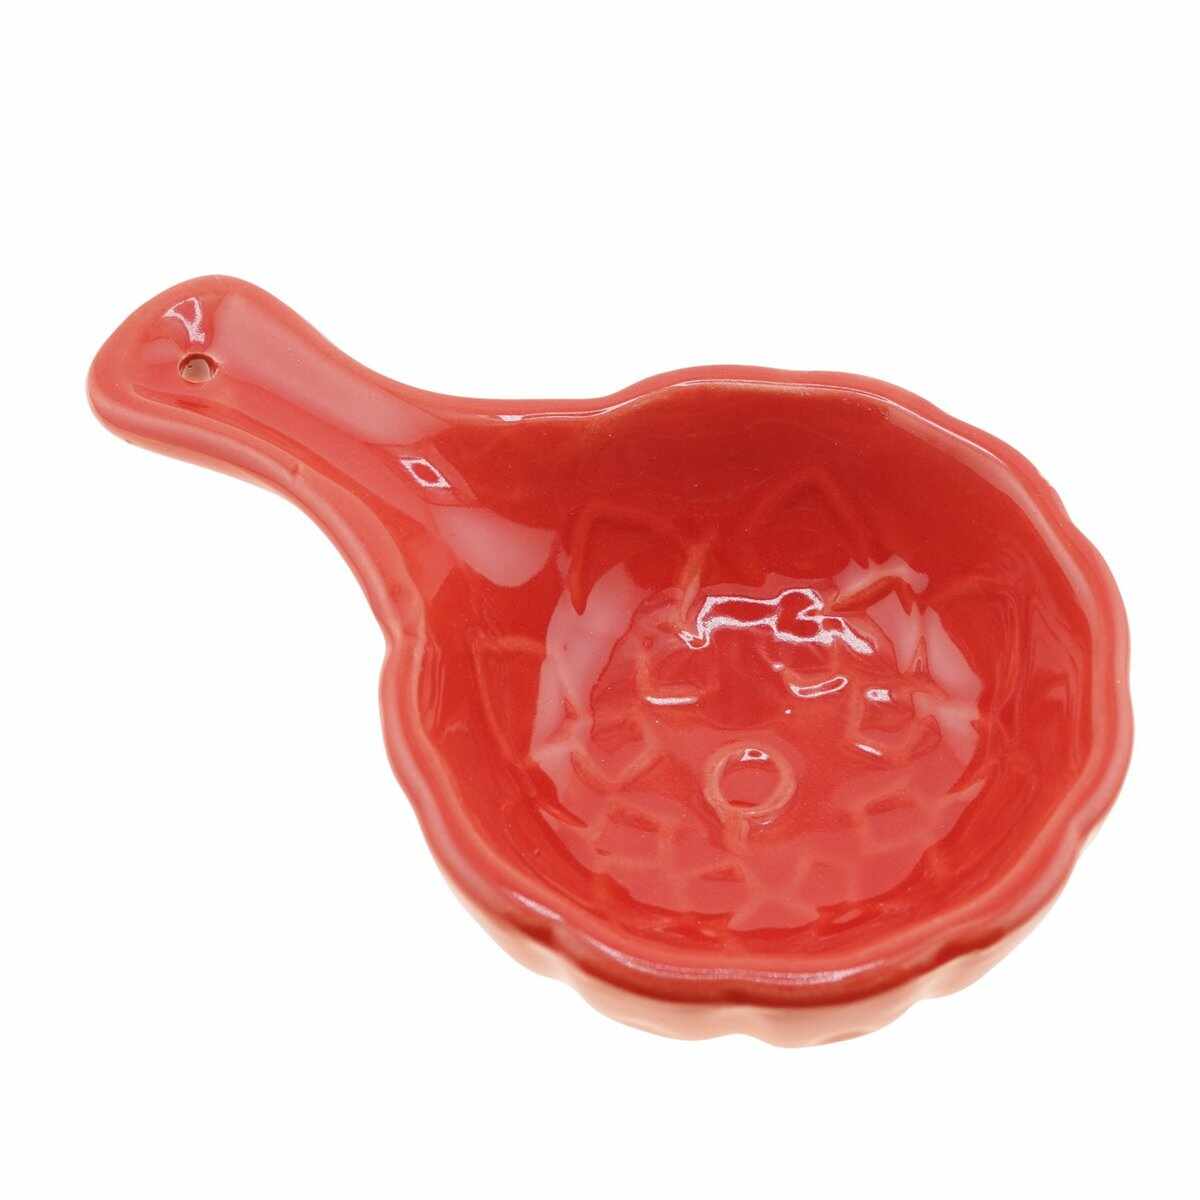 Suport din ceramica pentru ardere conuri parfumate si ierburi naturale lingura rosie 125cm